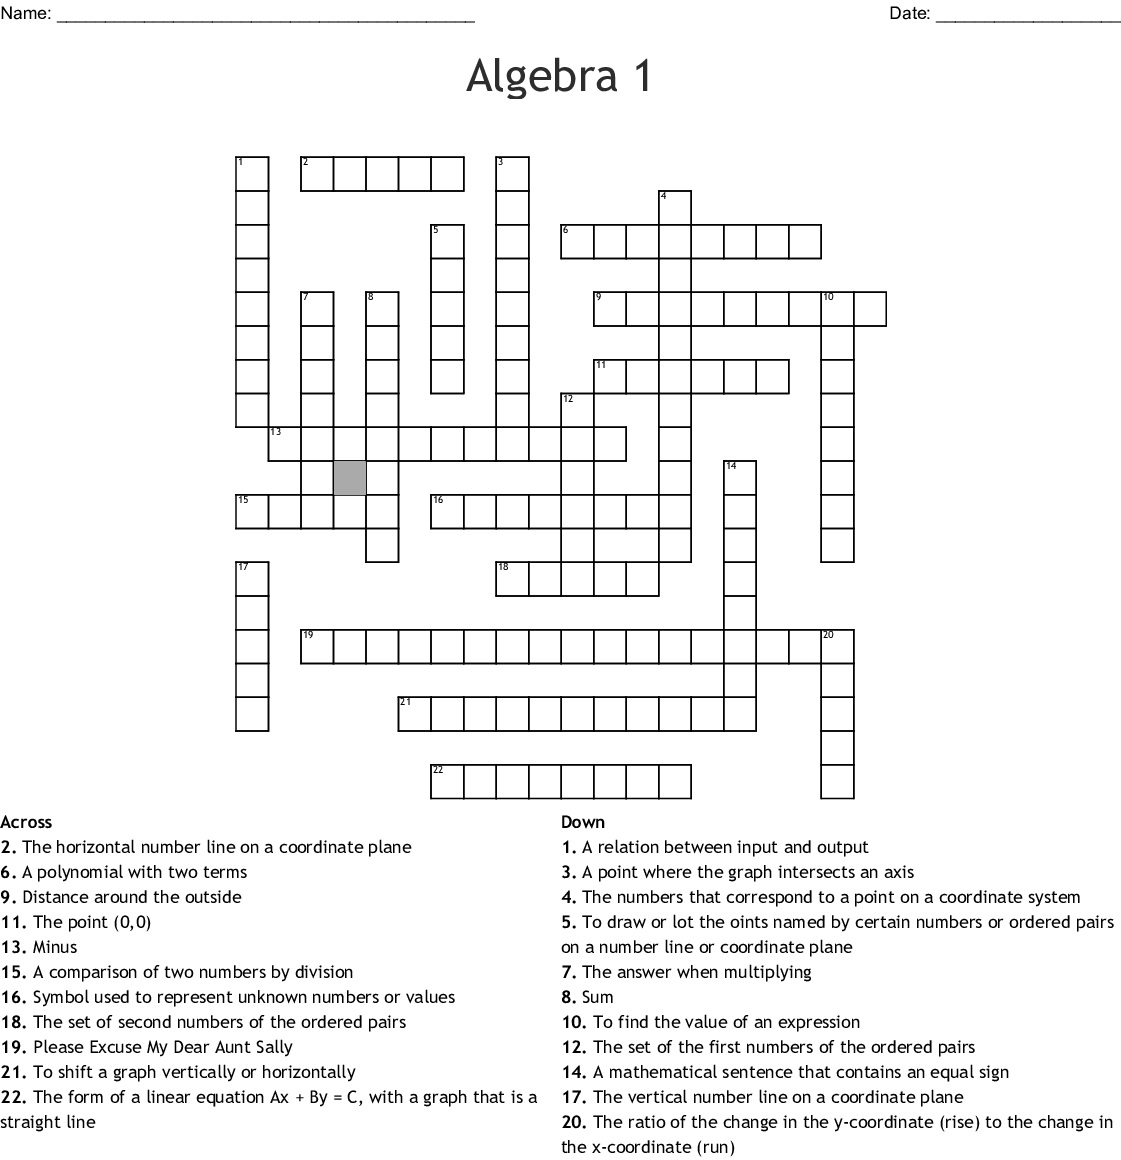 Algebra 1 Crossword - Wordmint - Algebra 1 Crossword Puzzles Printable